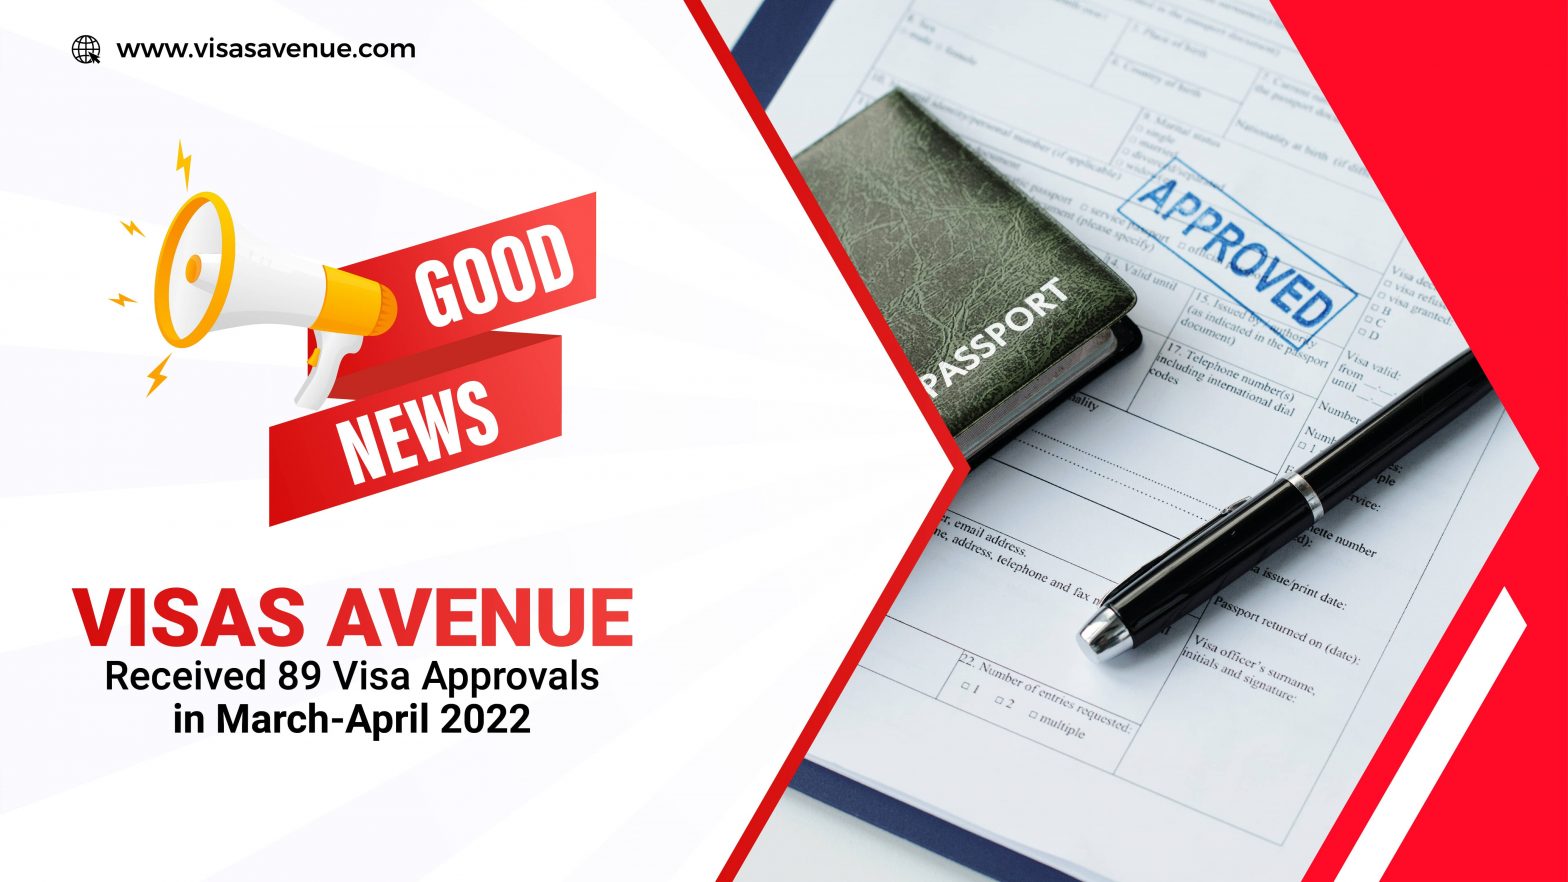 Visas Avenue received 89 Visa Approvals in March-April 2022